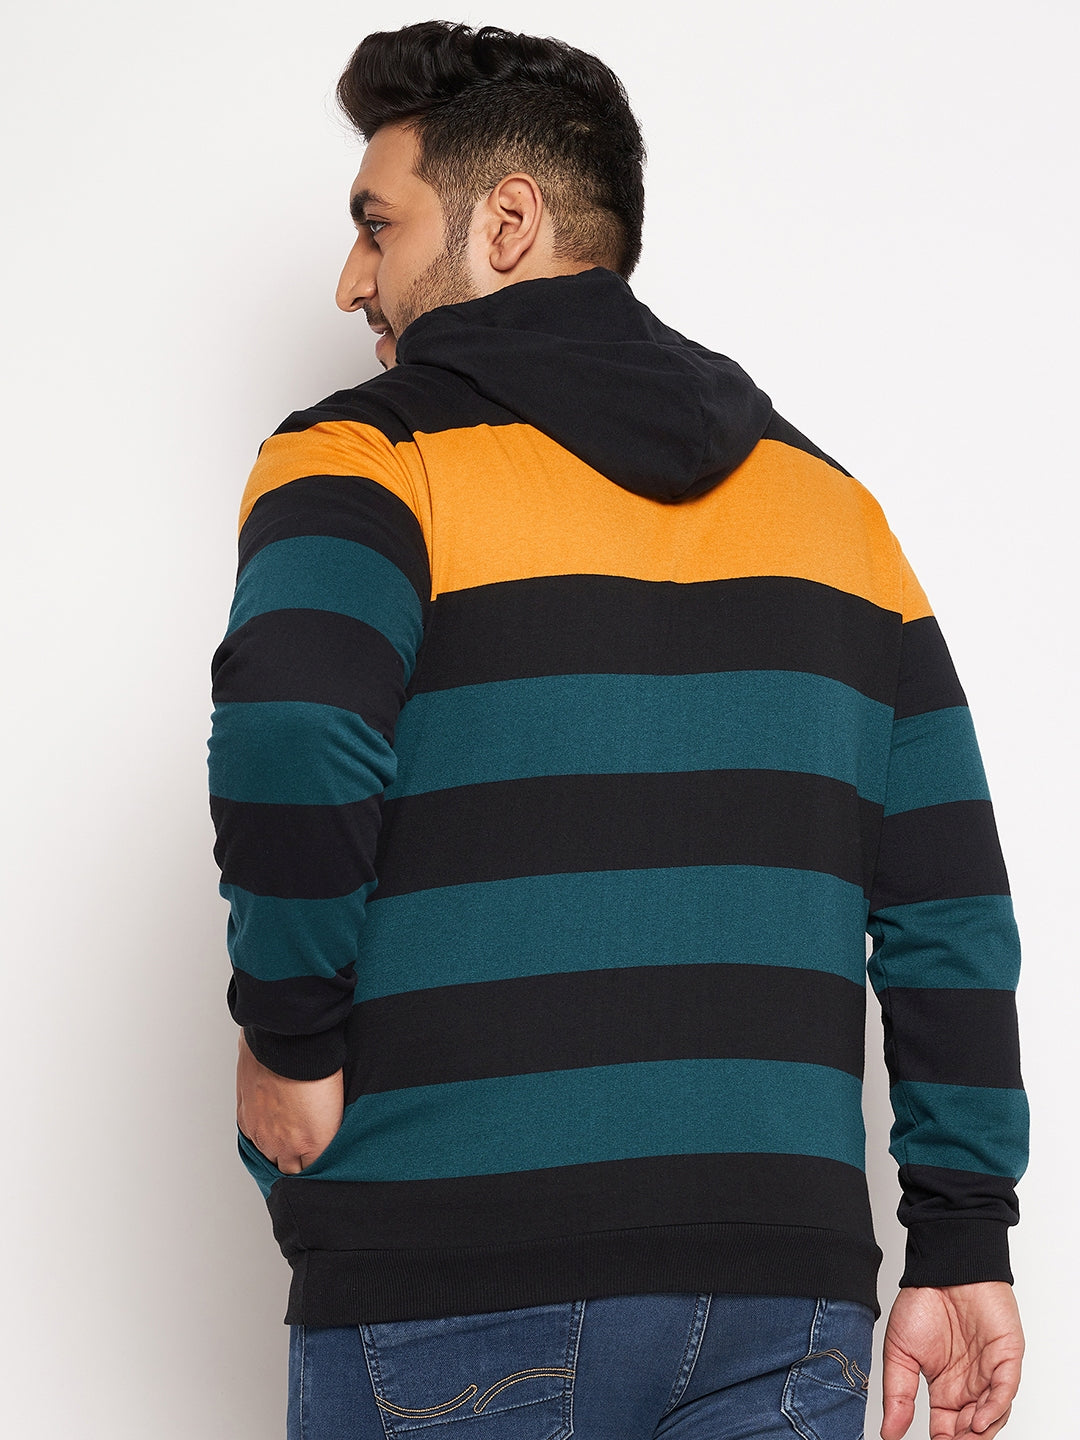 Austivo Men's Colour Block Hooded Sweatshirt